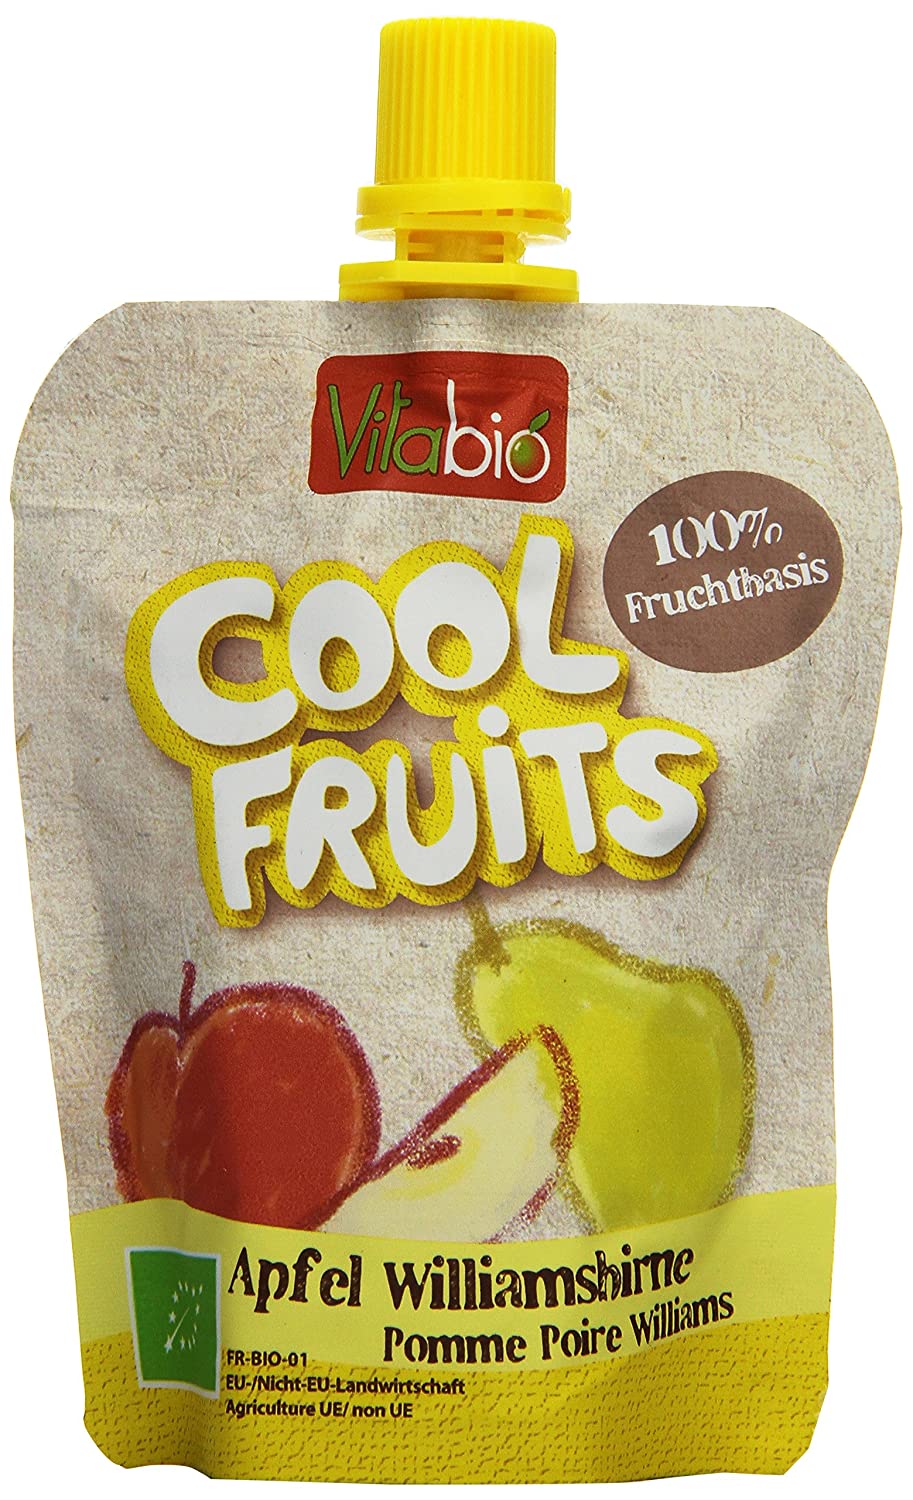 Vitabio Cool Fruits Apfel/Birne, 8er Pack (8 x 90 g)